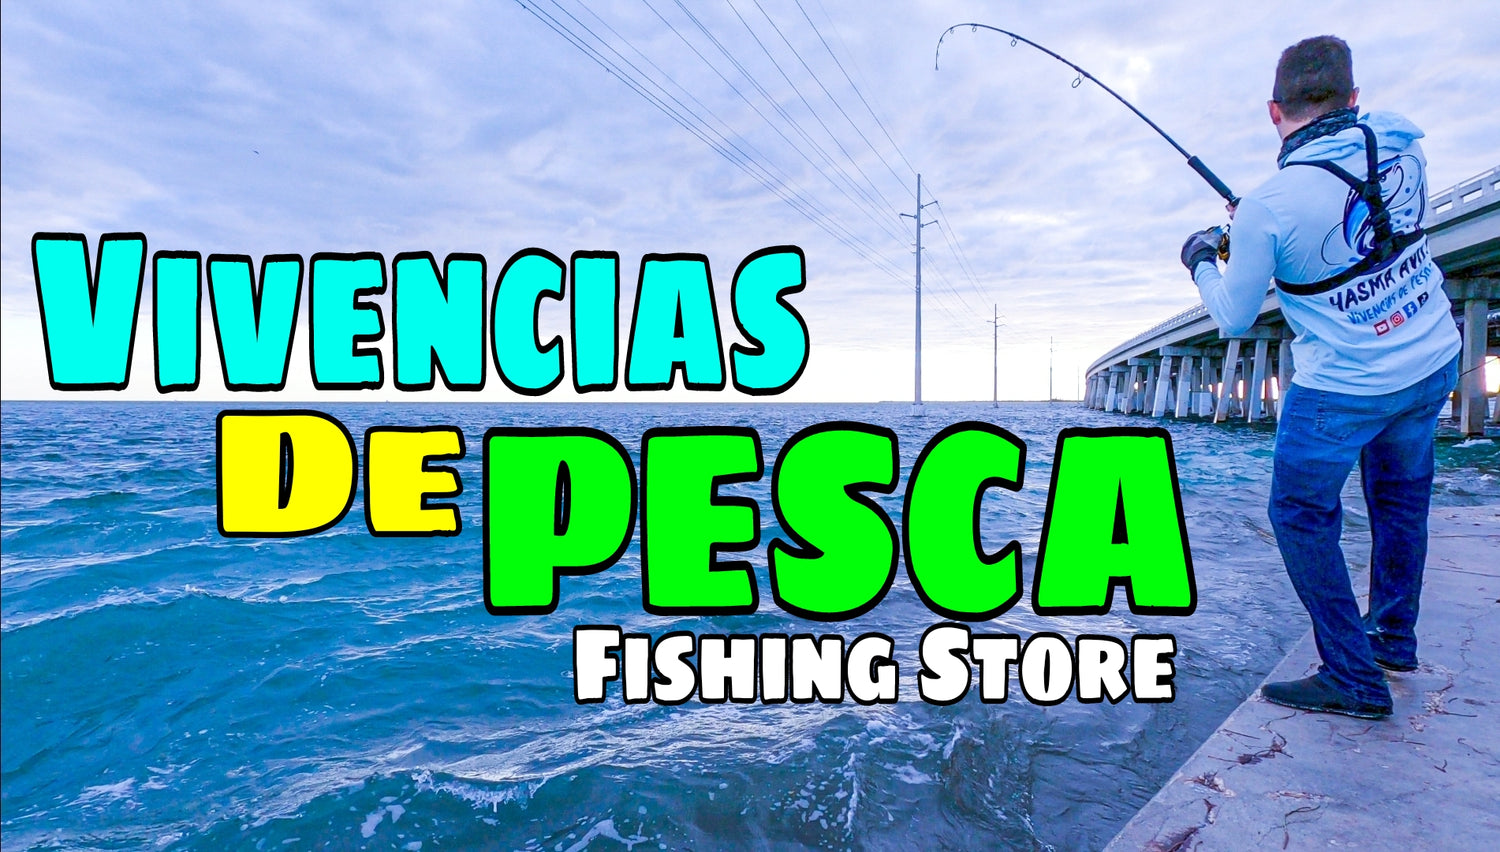 Vivencias de Pesca Fishing Store